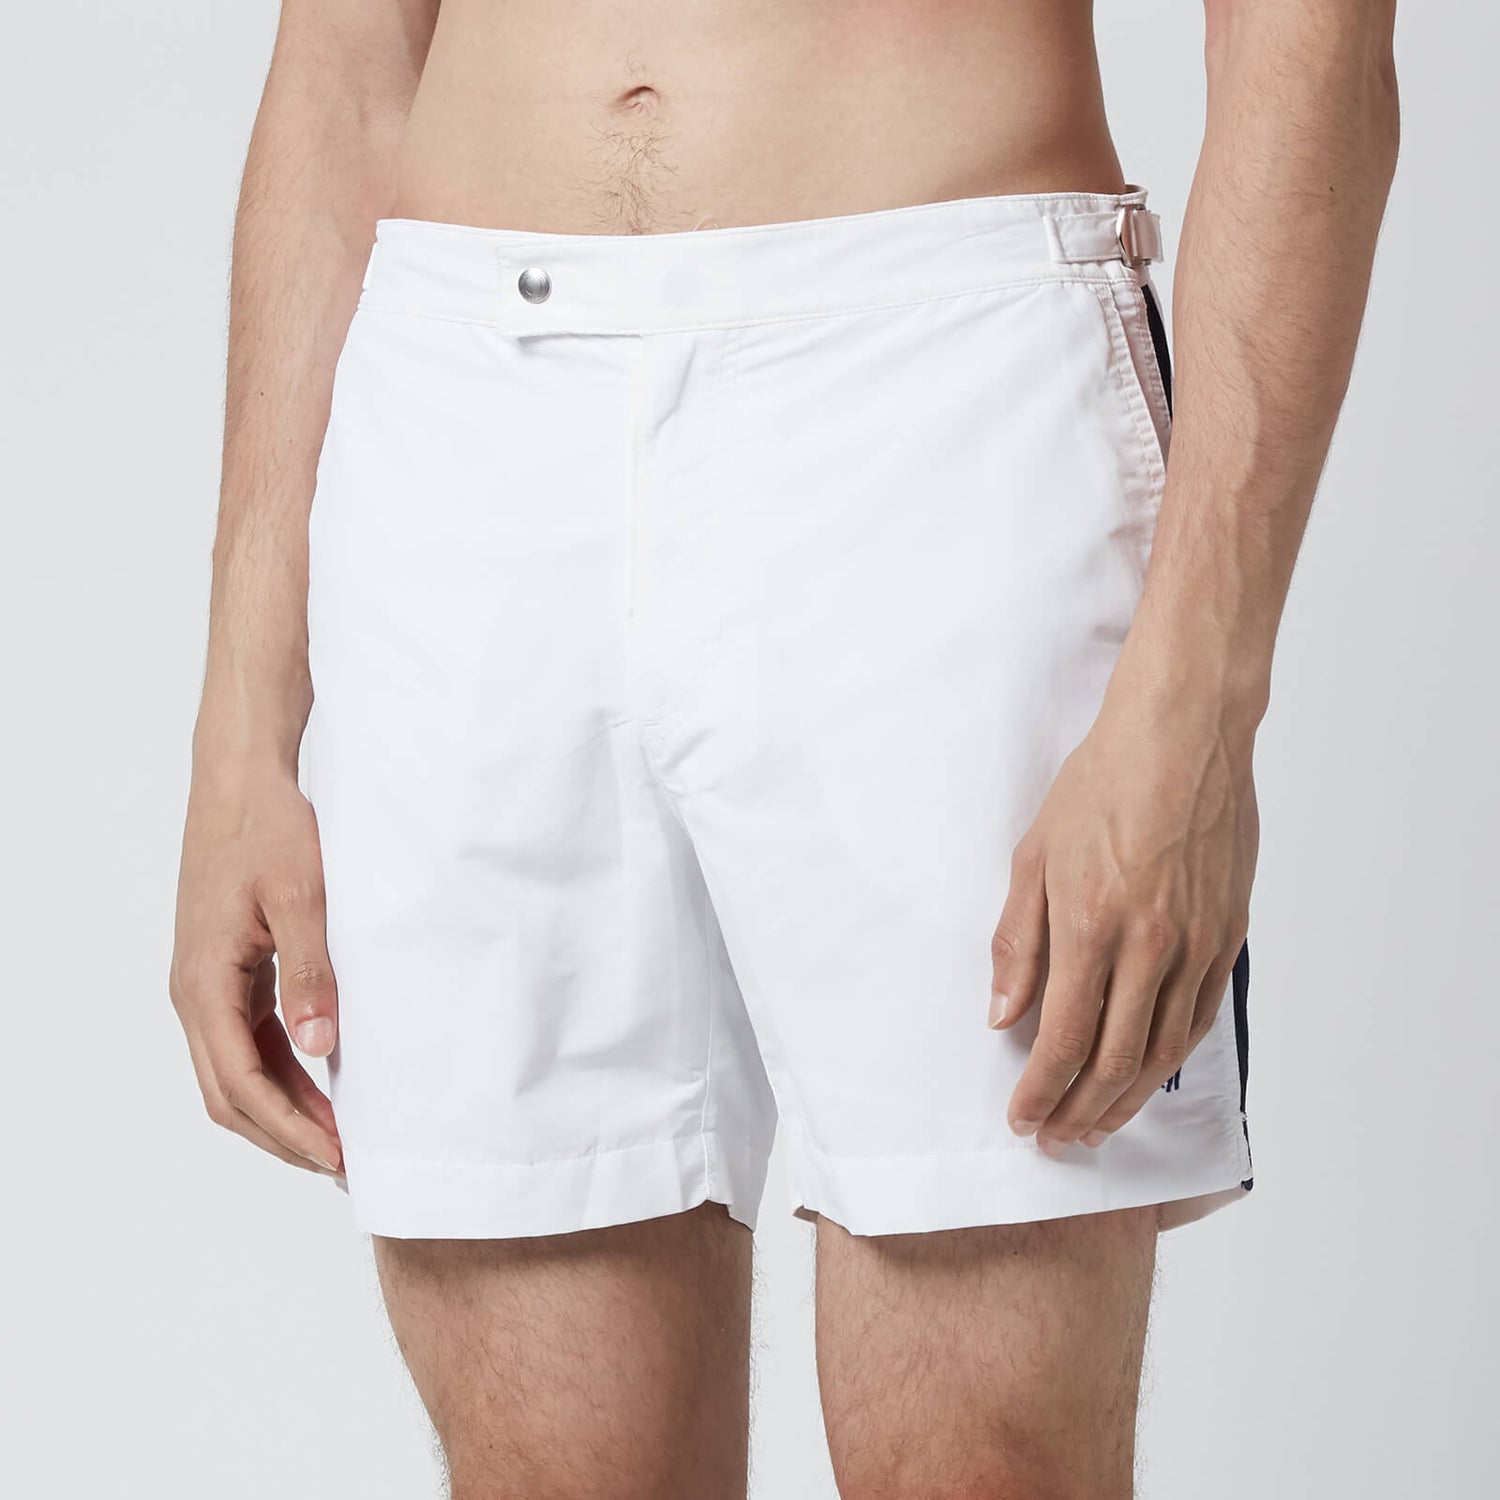 Polo Ralph Lauren Men's Monaco Swim Shorts - White/Newport Navy